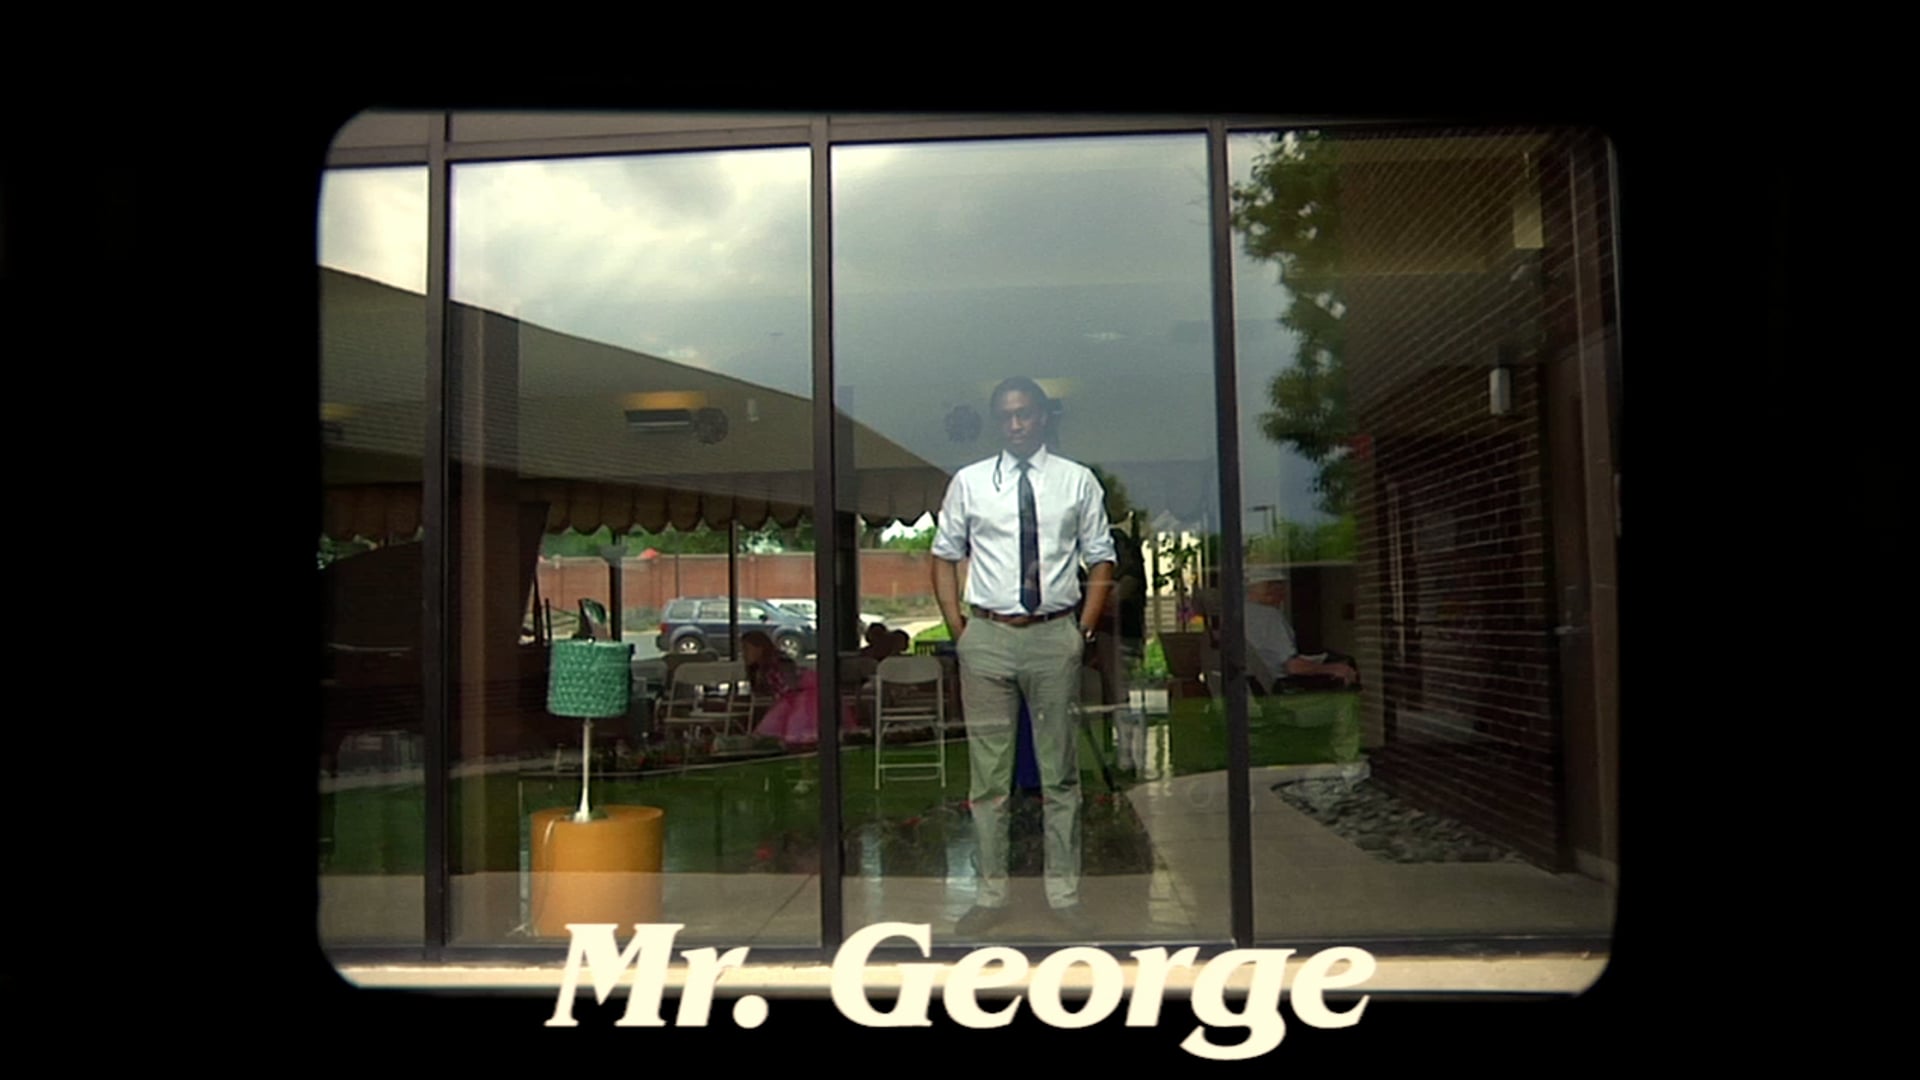 Mr. George